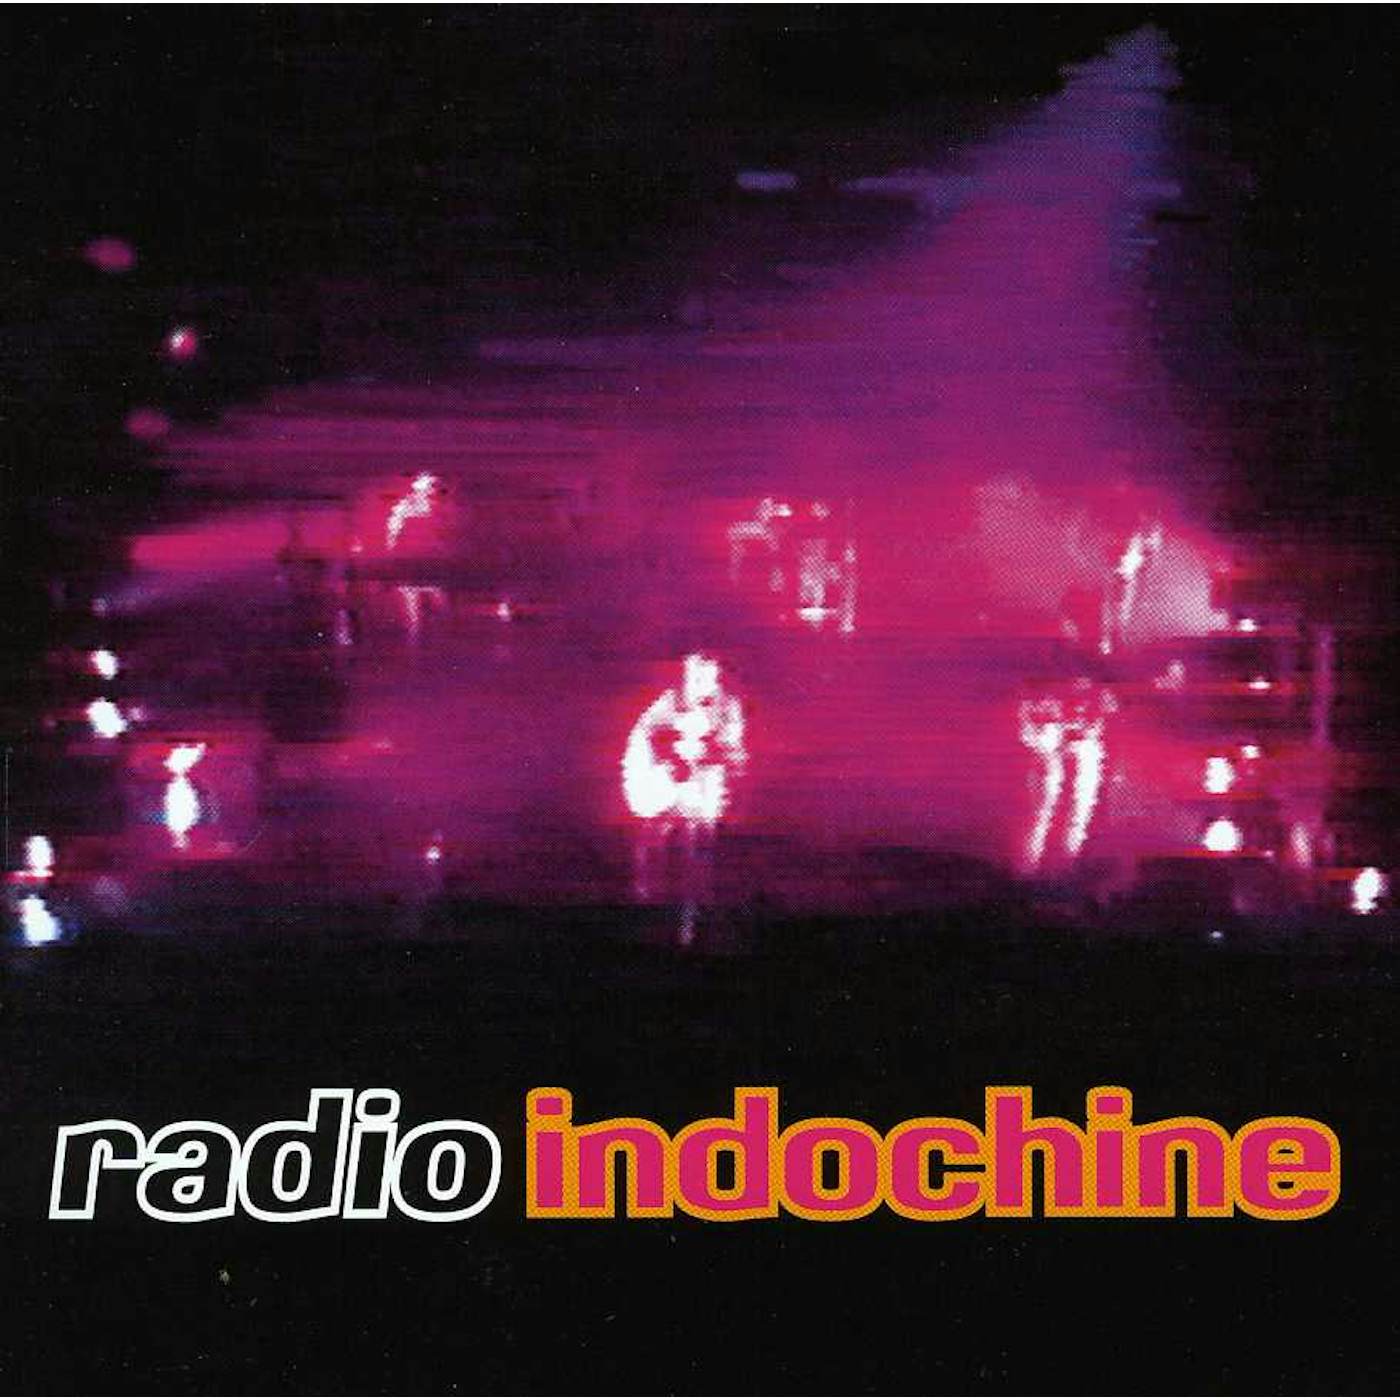 RADIO INDOCHINE CD